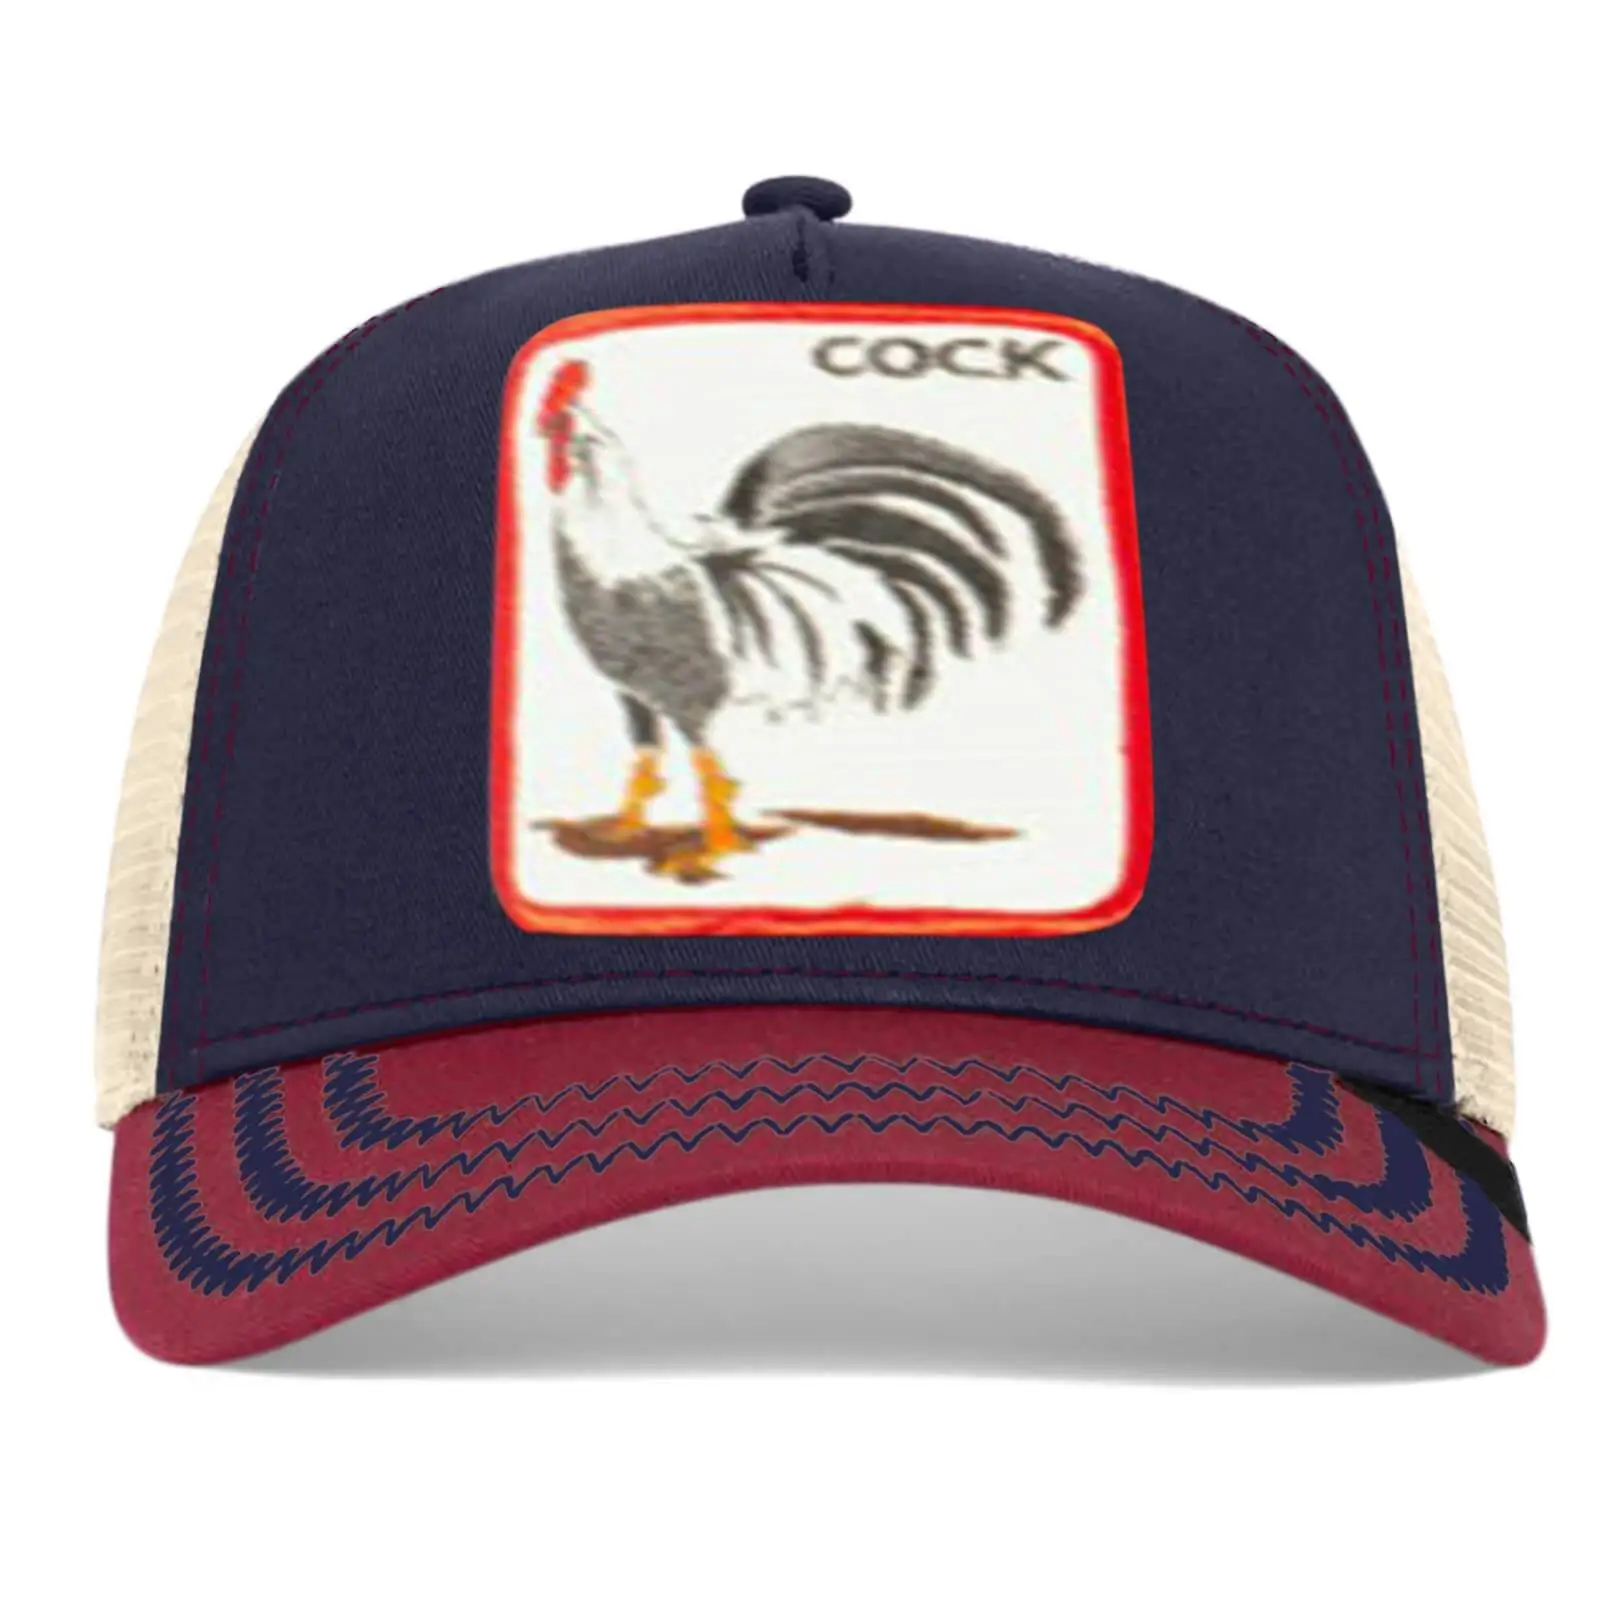 The Cock Goorin Bros Hat